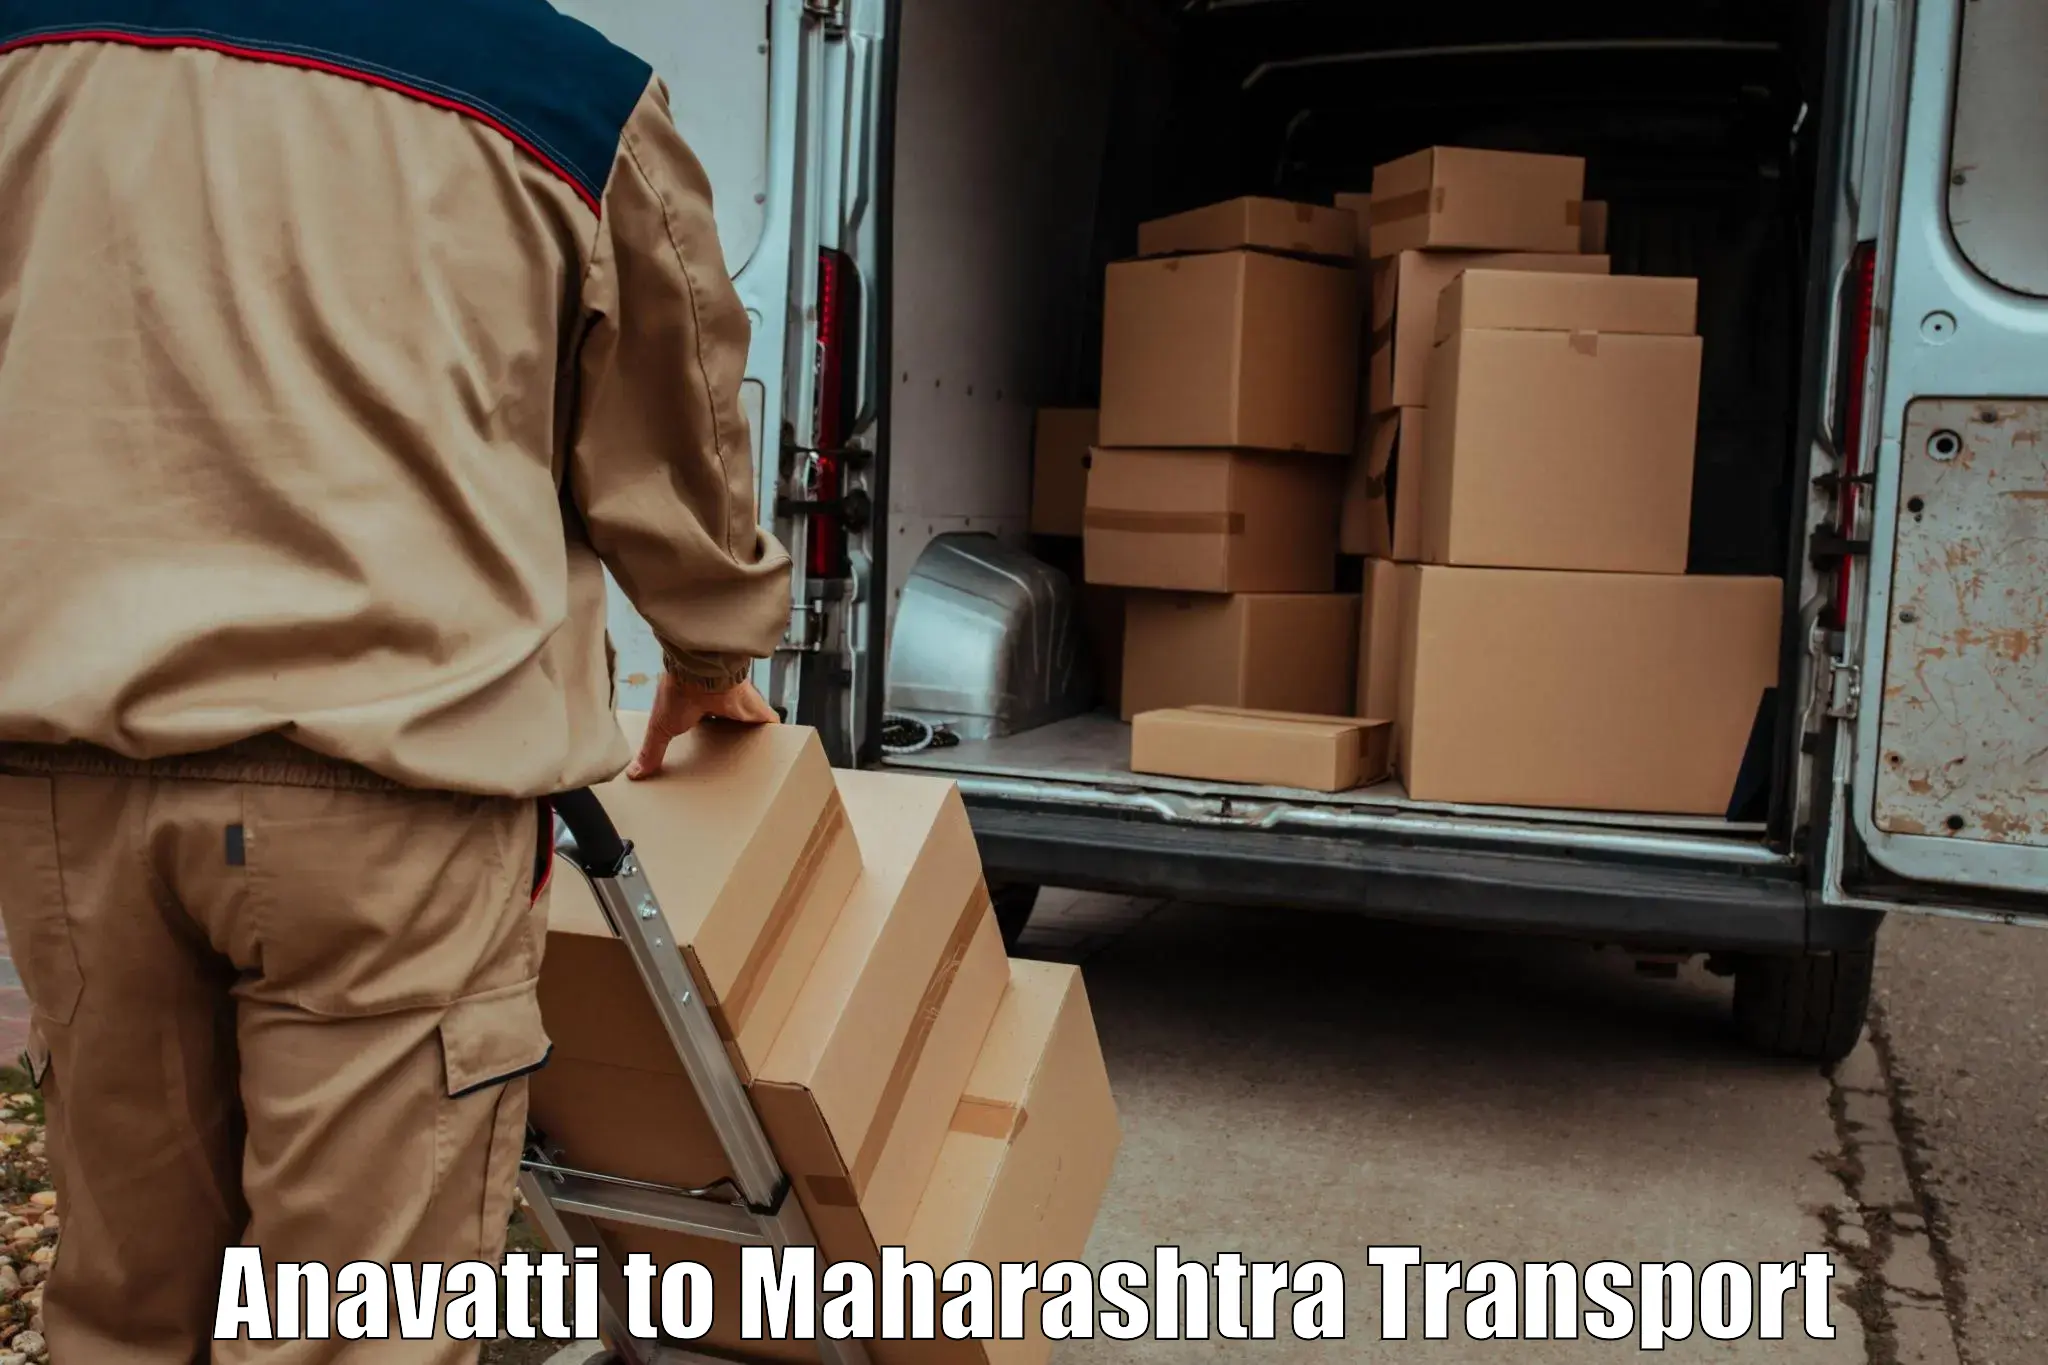 Delivery service Anavatti to Maharashtra